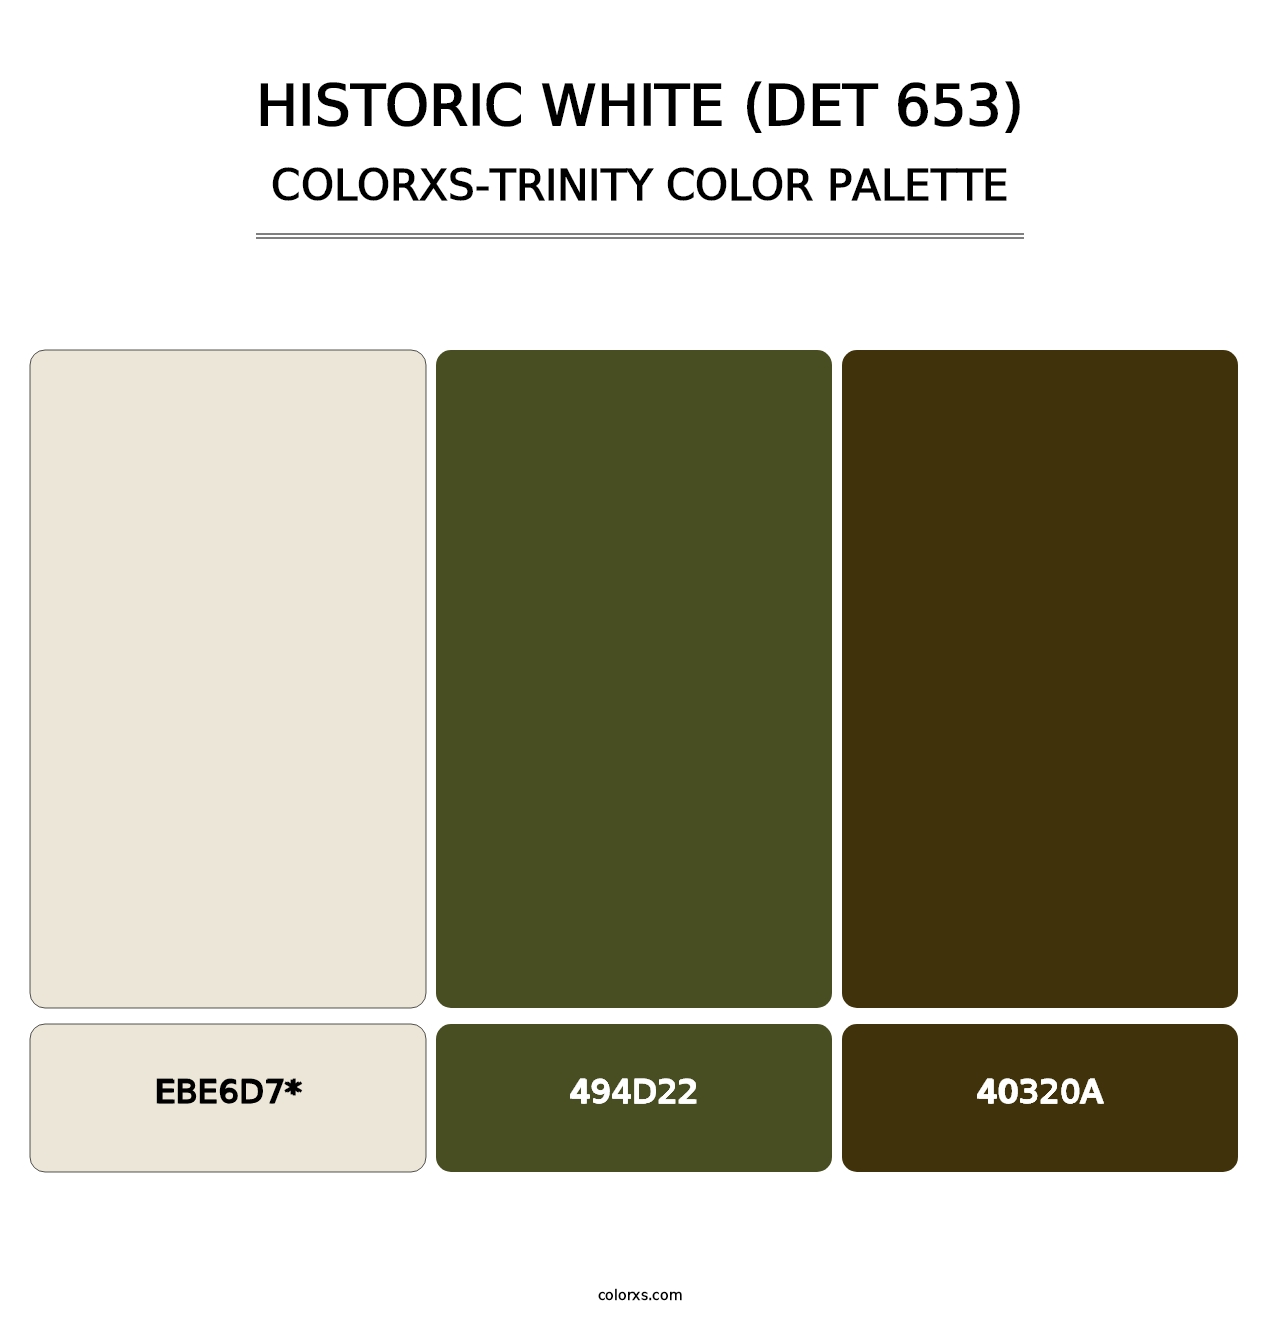 Historic White (DET 653) - Colorxs Trinity Palette